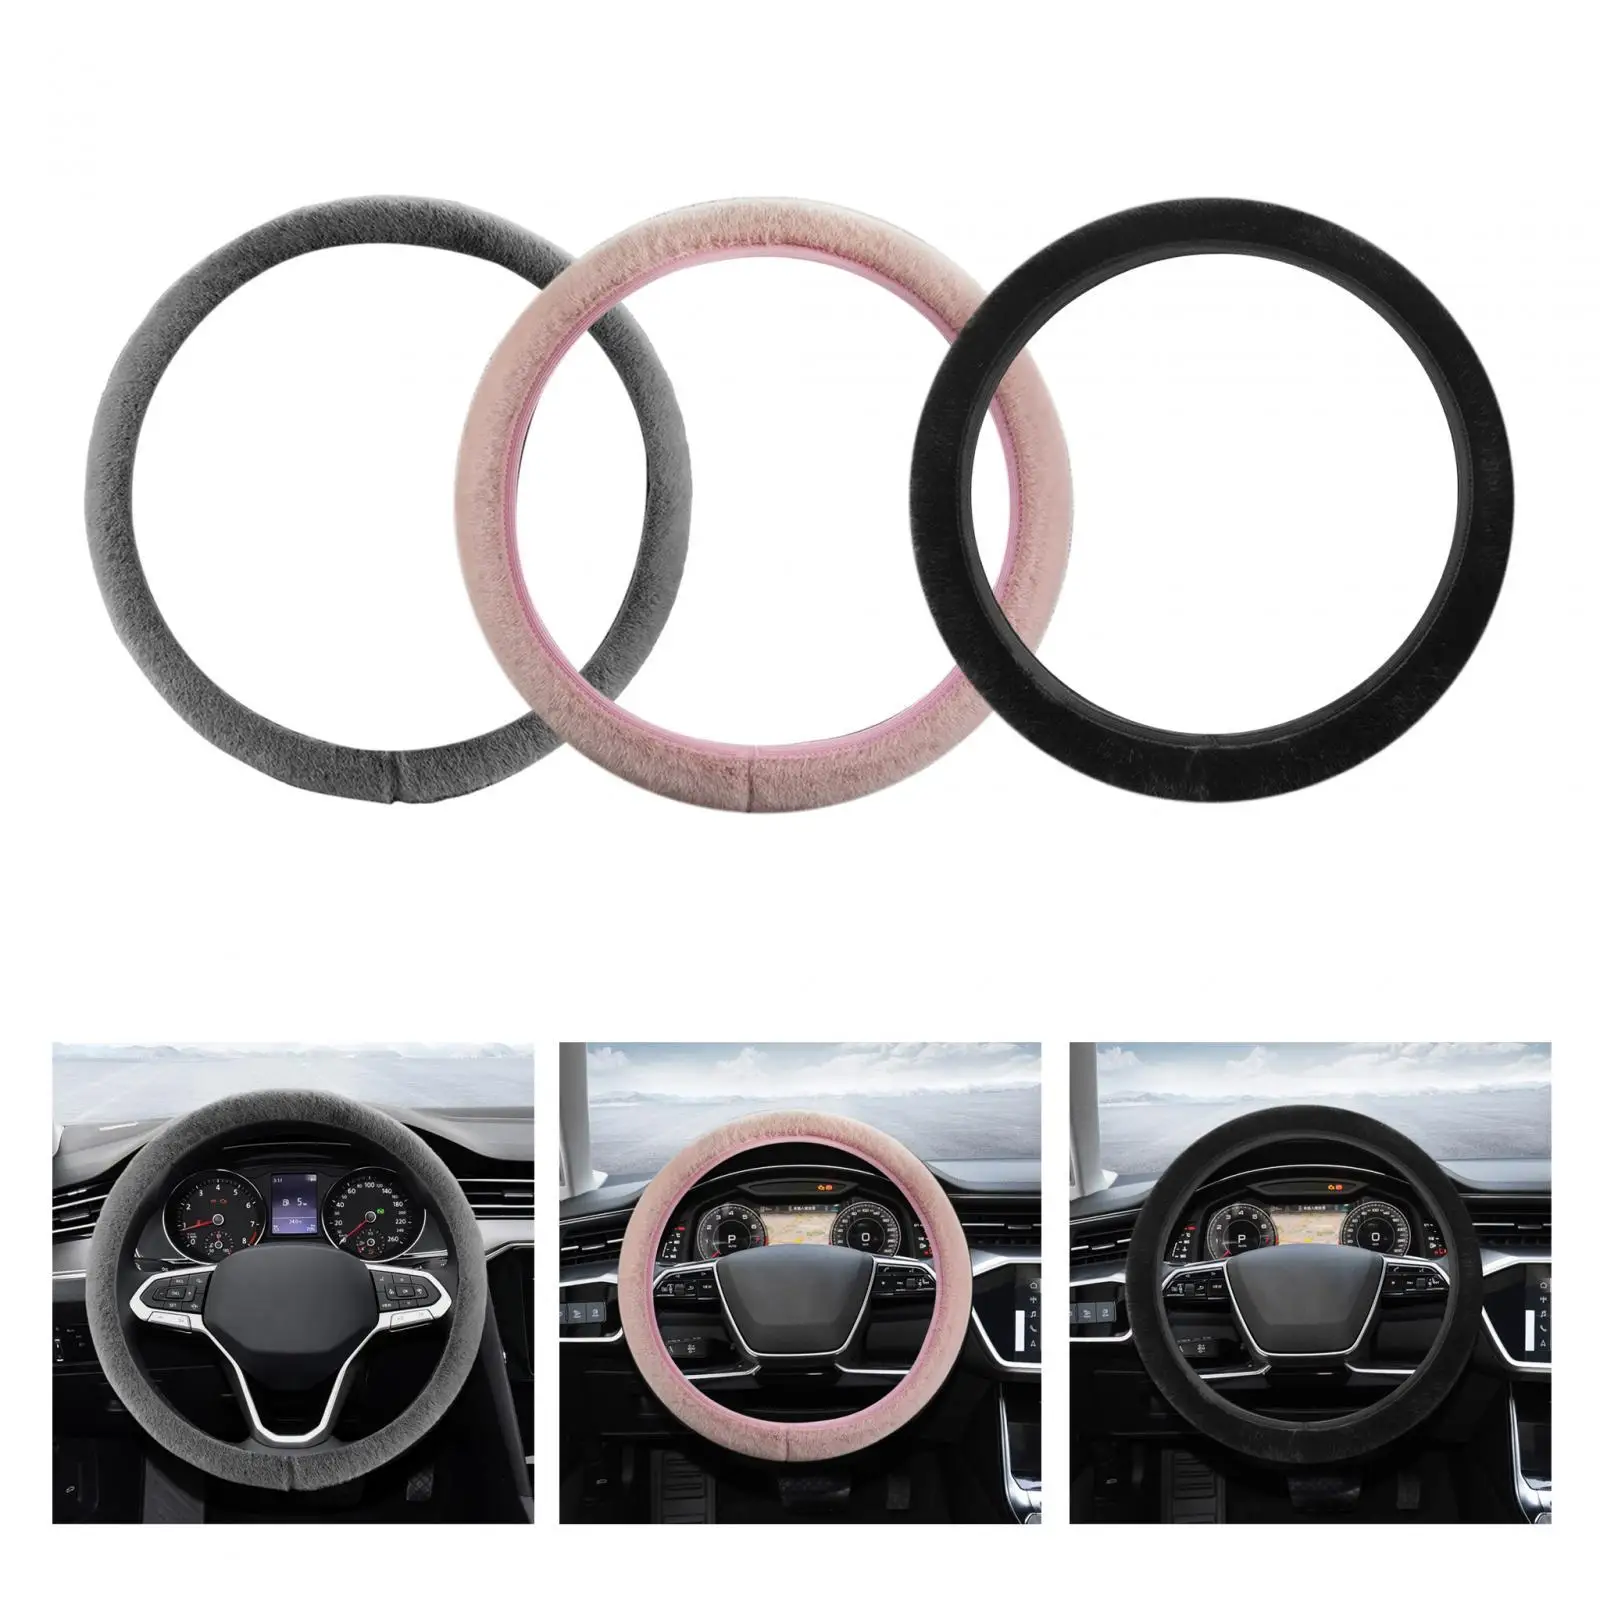 38cm Soft Plush Car Steering Wheel Cover Stylish Breathable Comfortable Grip